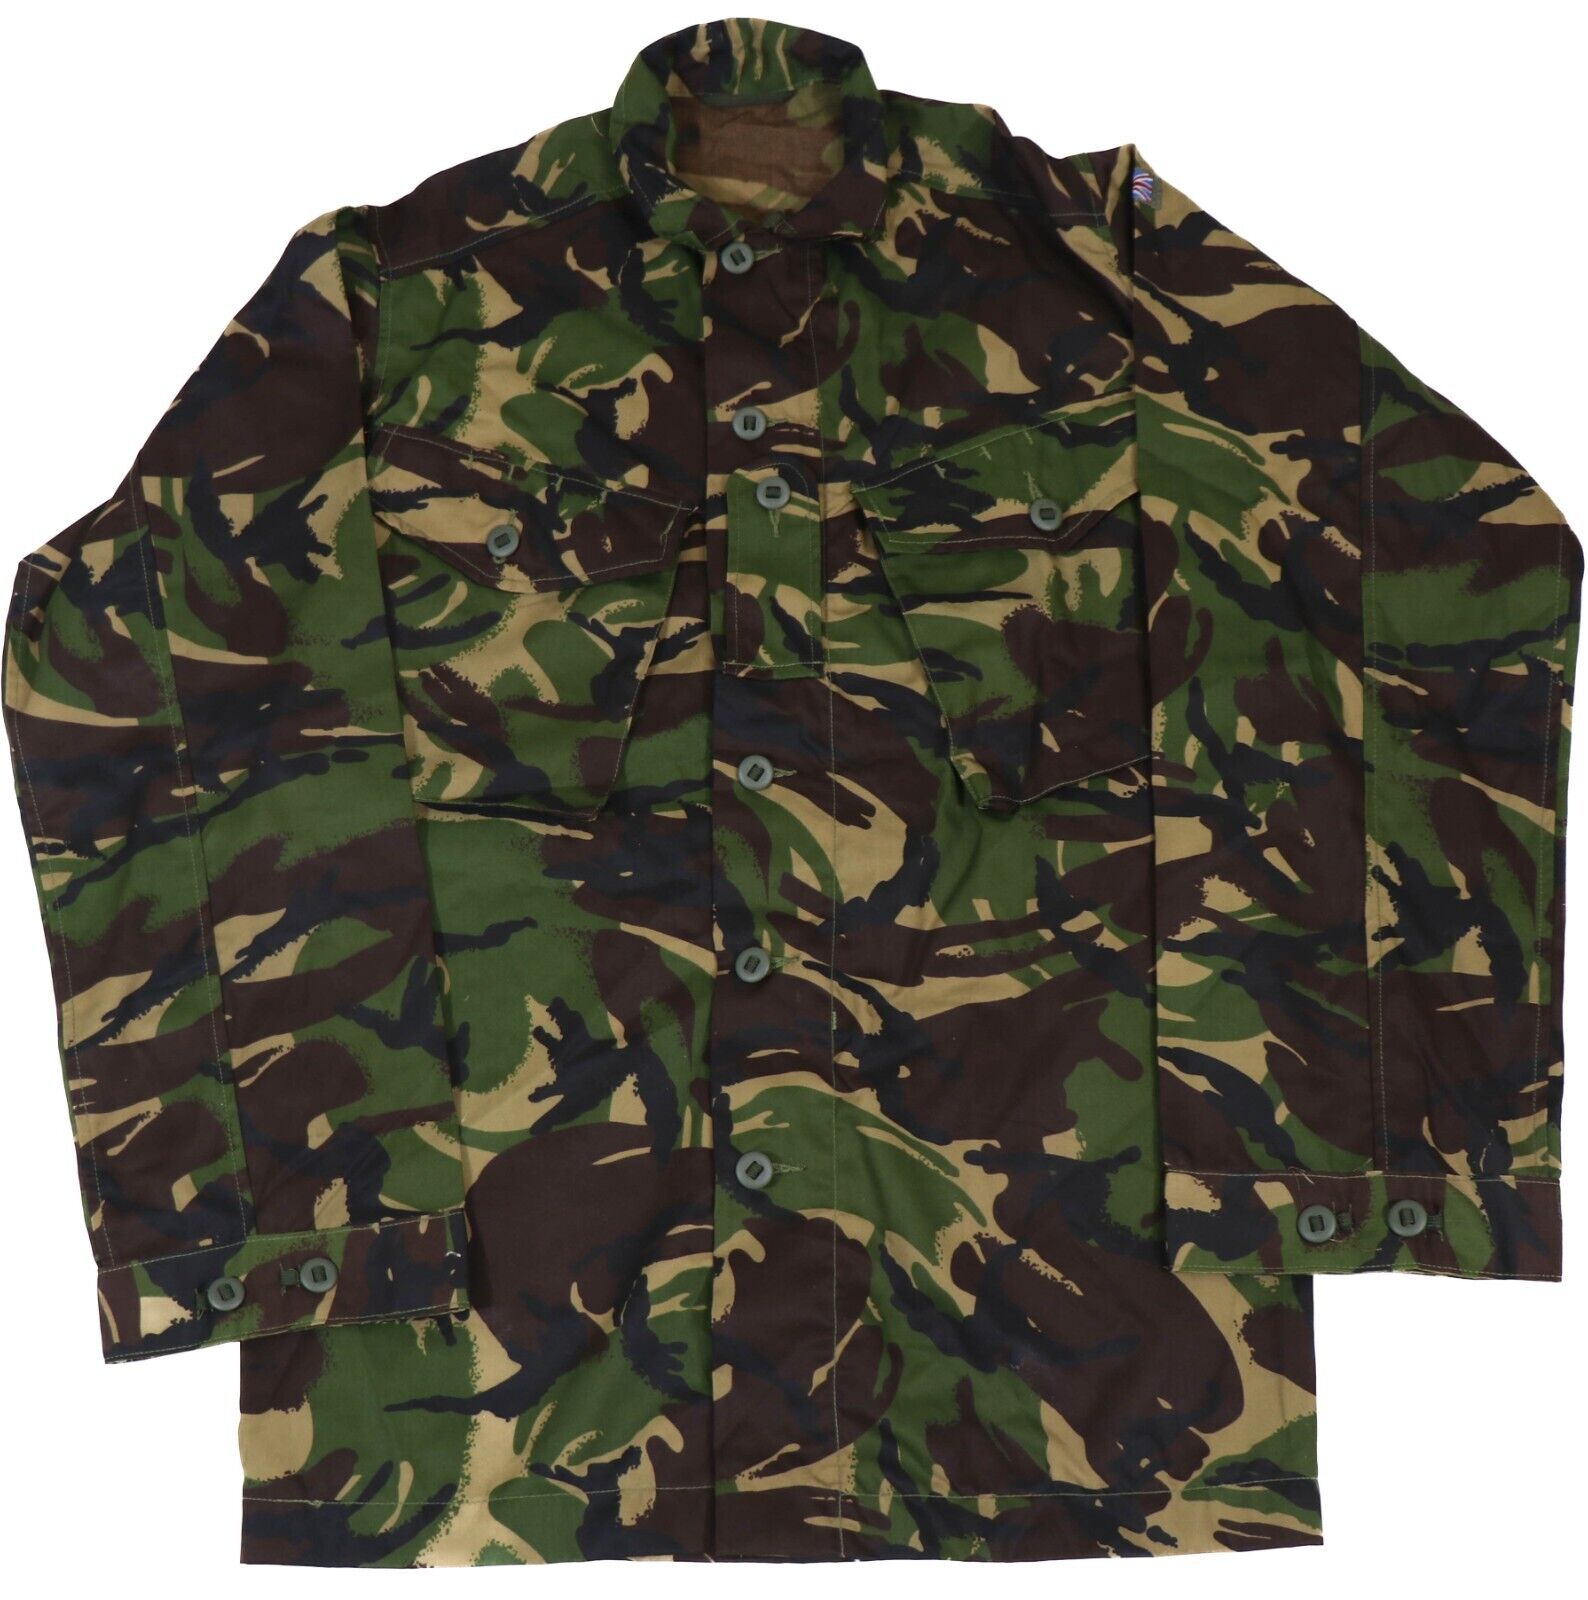 Small Reg (170/88) British Woodland DPM Jacket Shirt Uniform Army Military